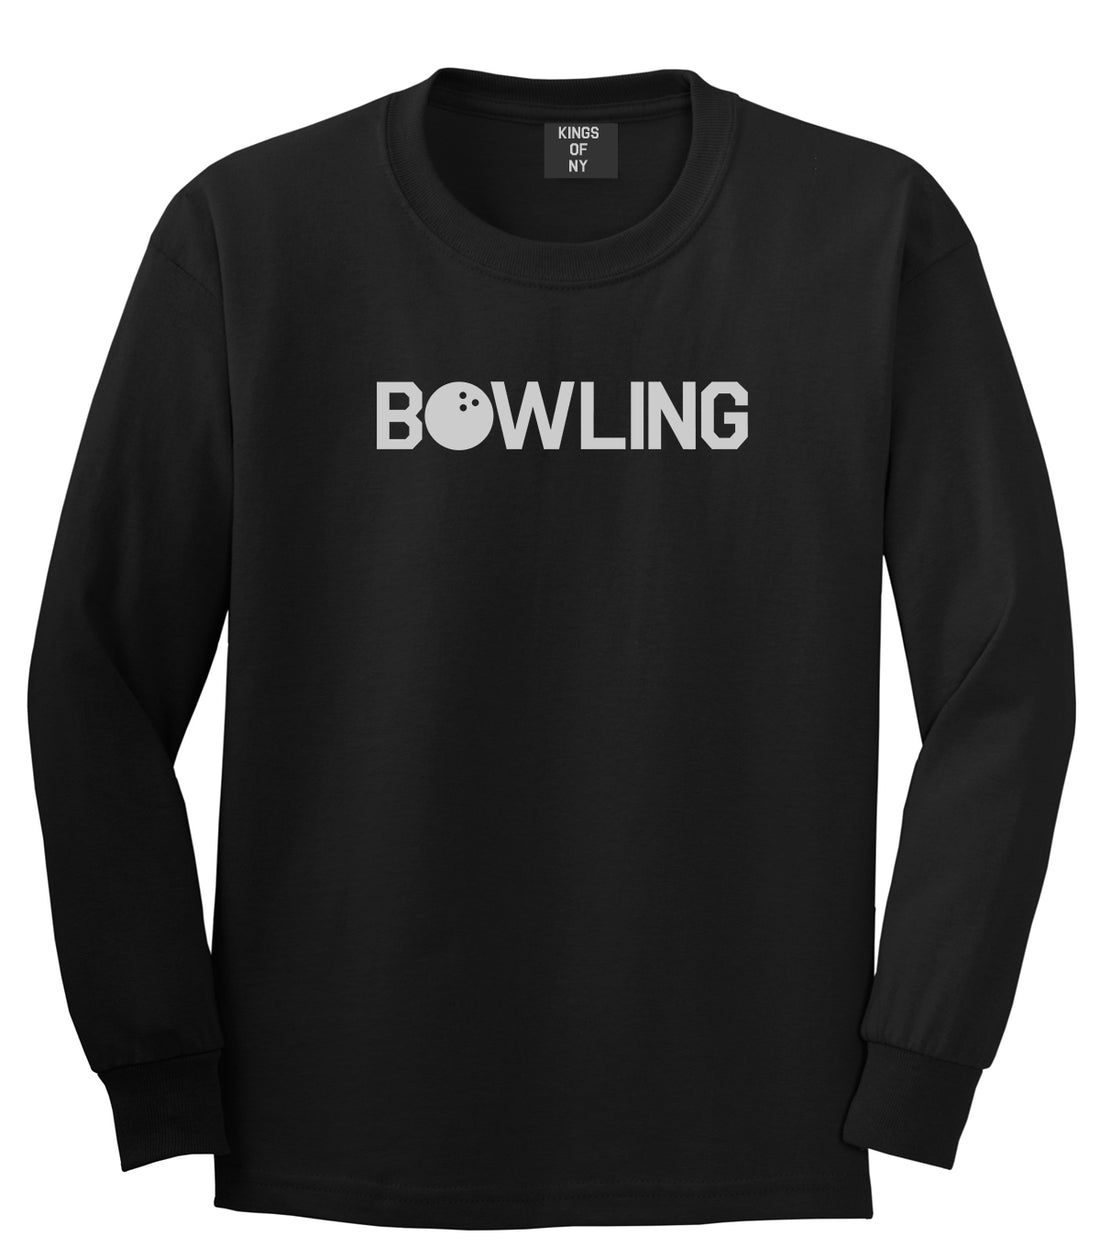 Bowling Black Long Sleeve T-Shirt by Kings Of NY